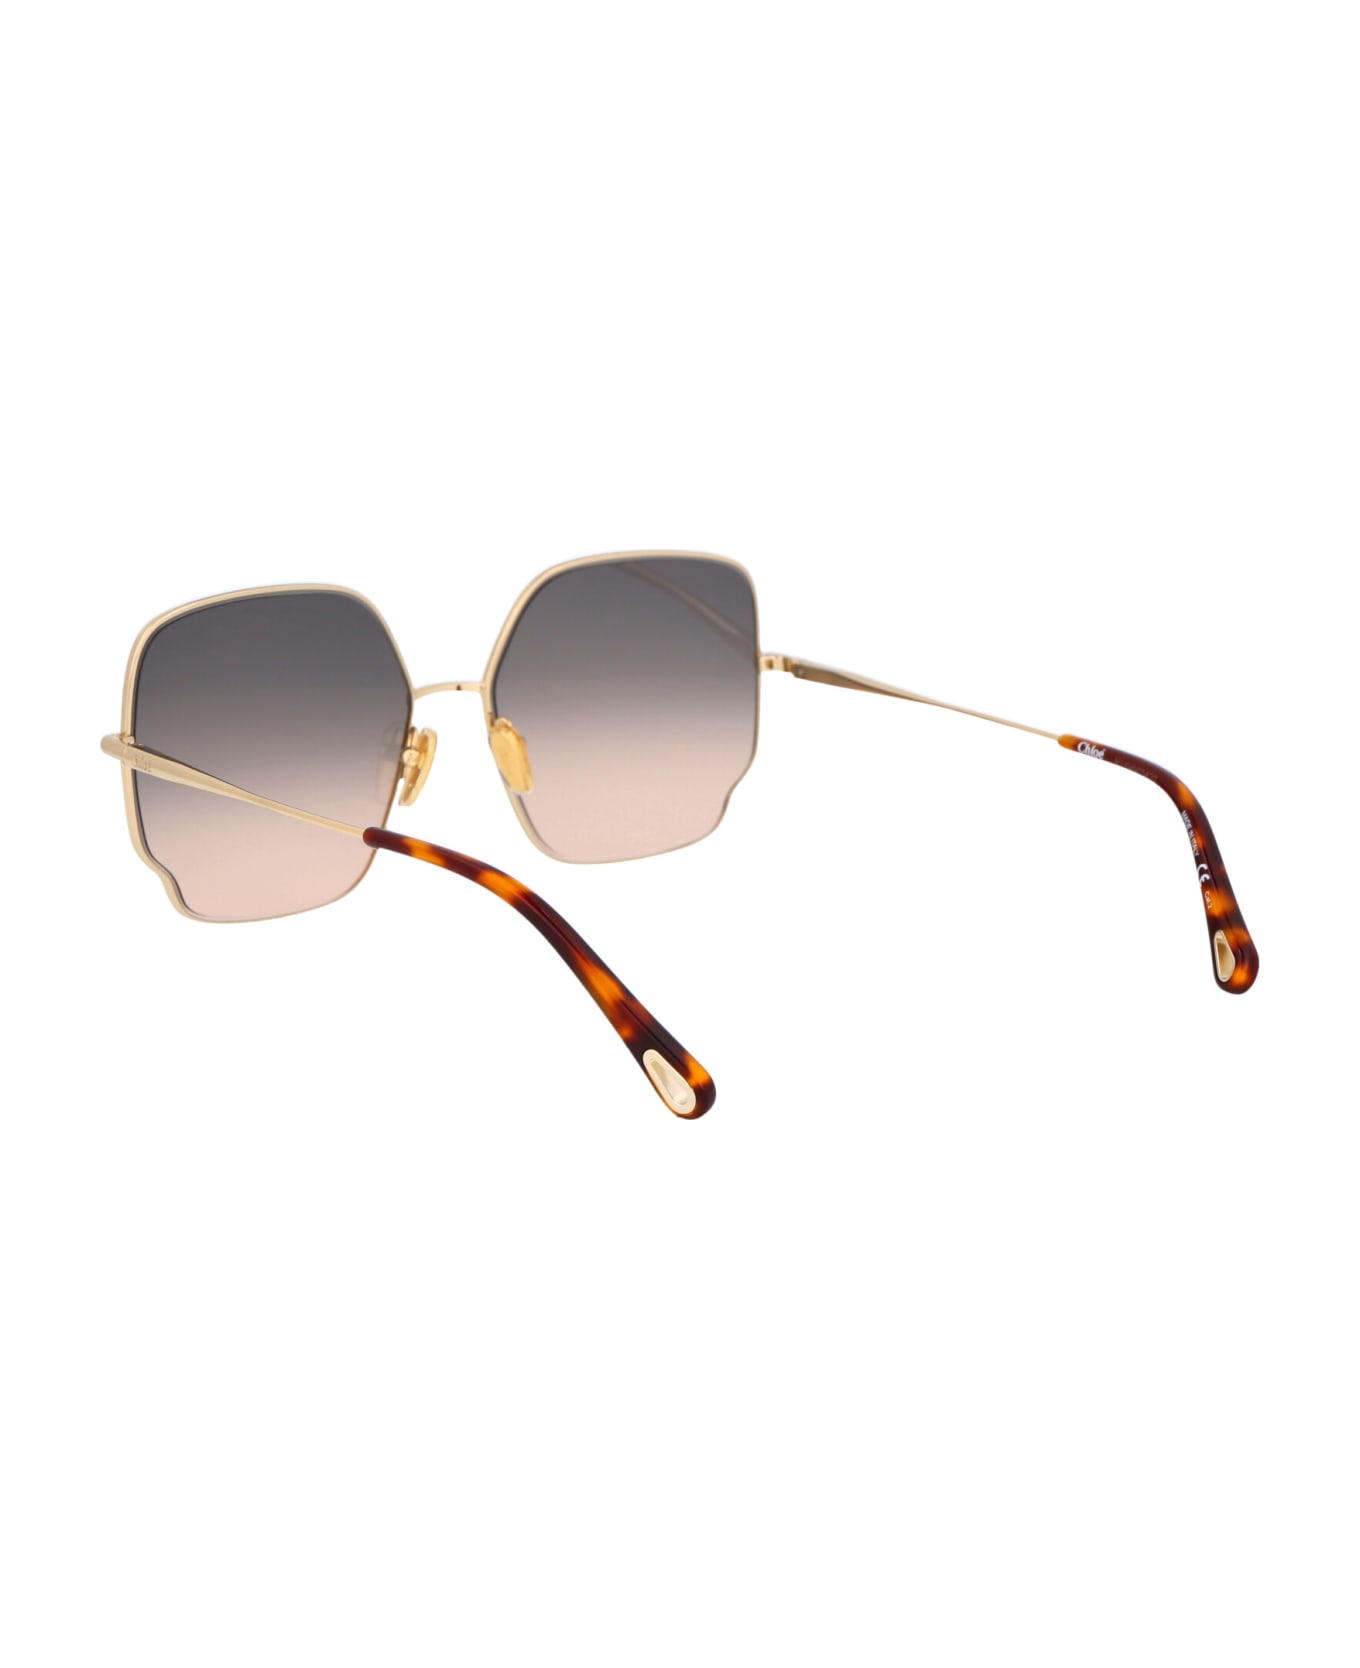 Chloé Eyewear Ch0092s Sunglasses - 001 GOLD GOLD BROWN サングラス